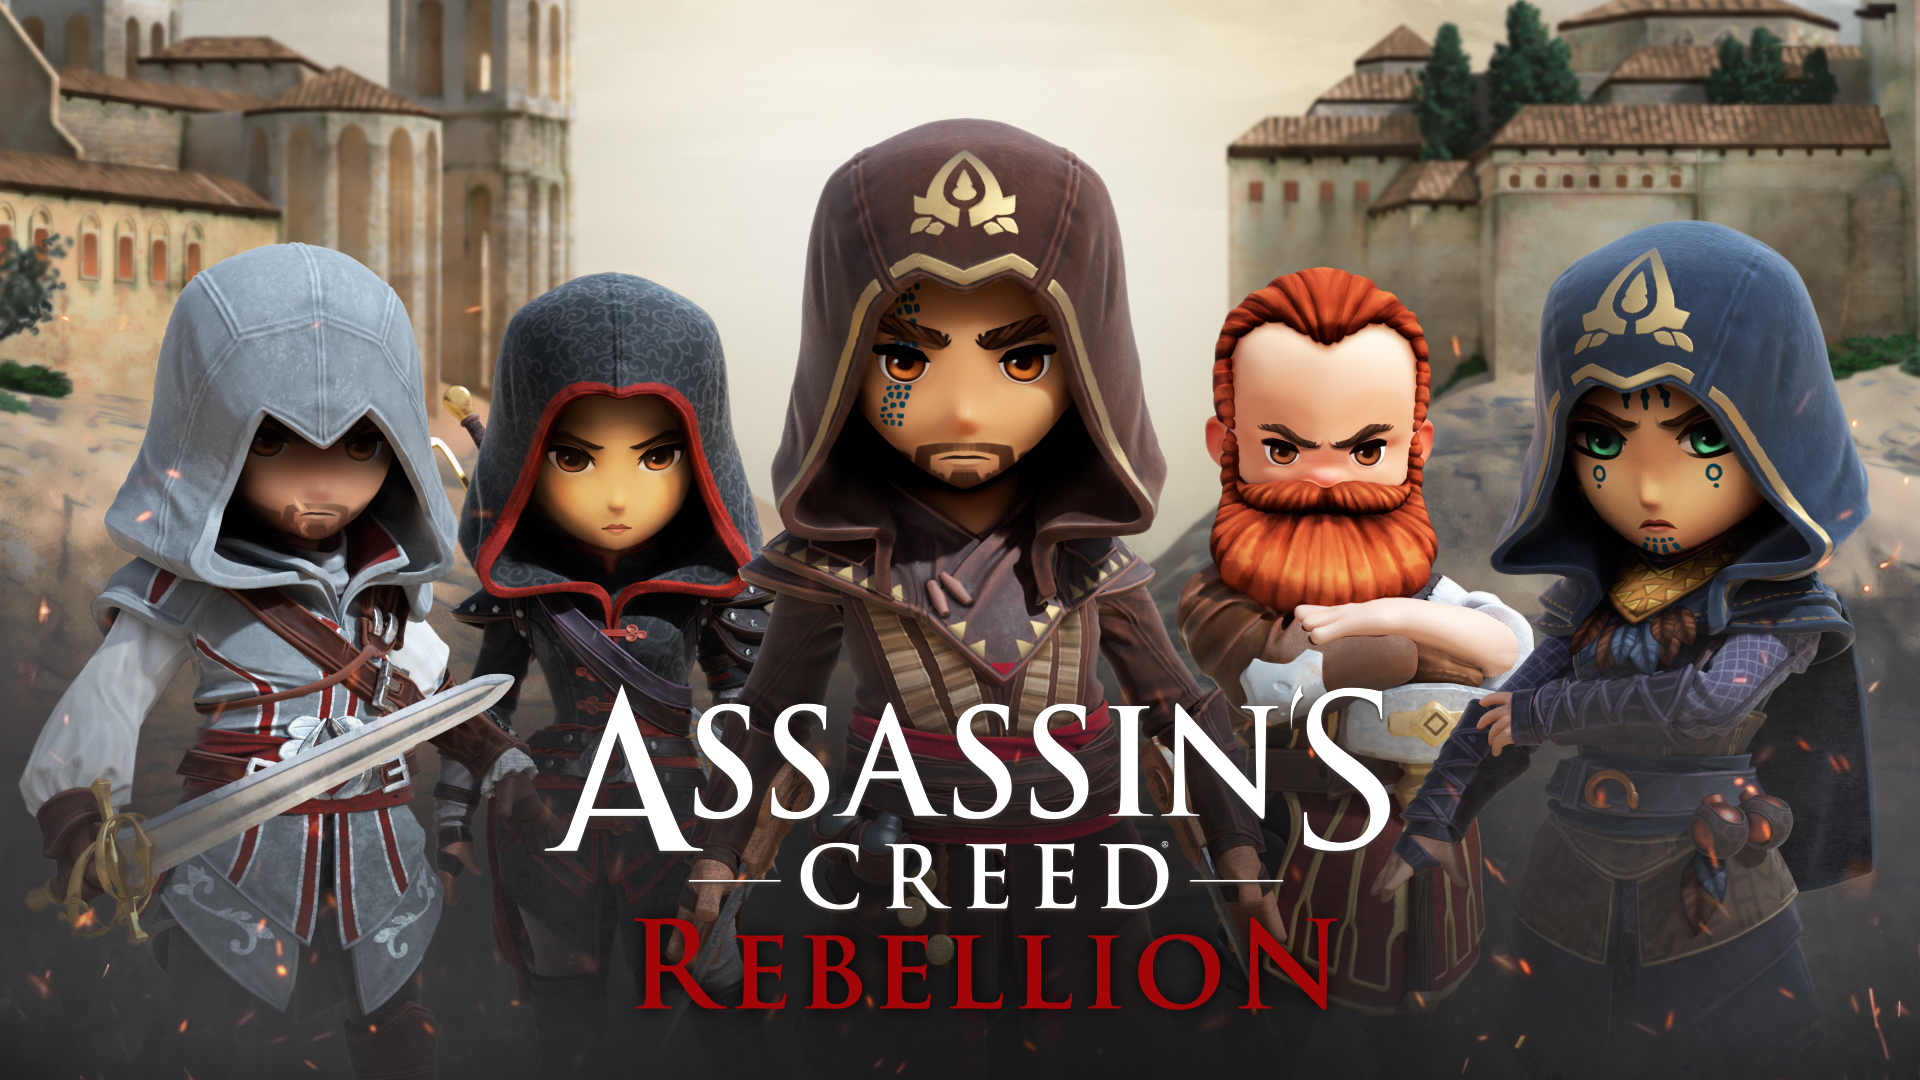 Assassin 's Creed: Rebellion